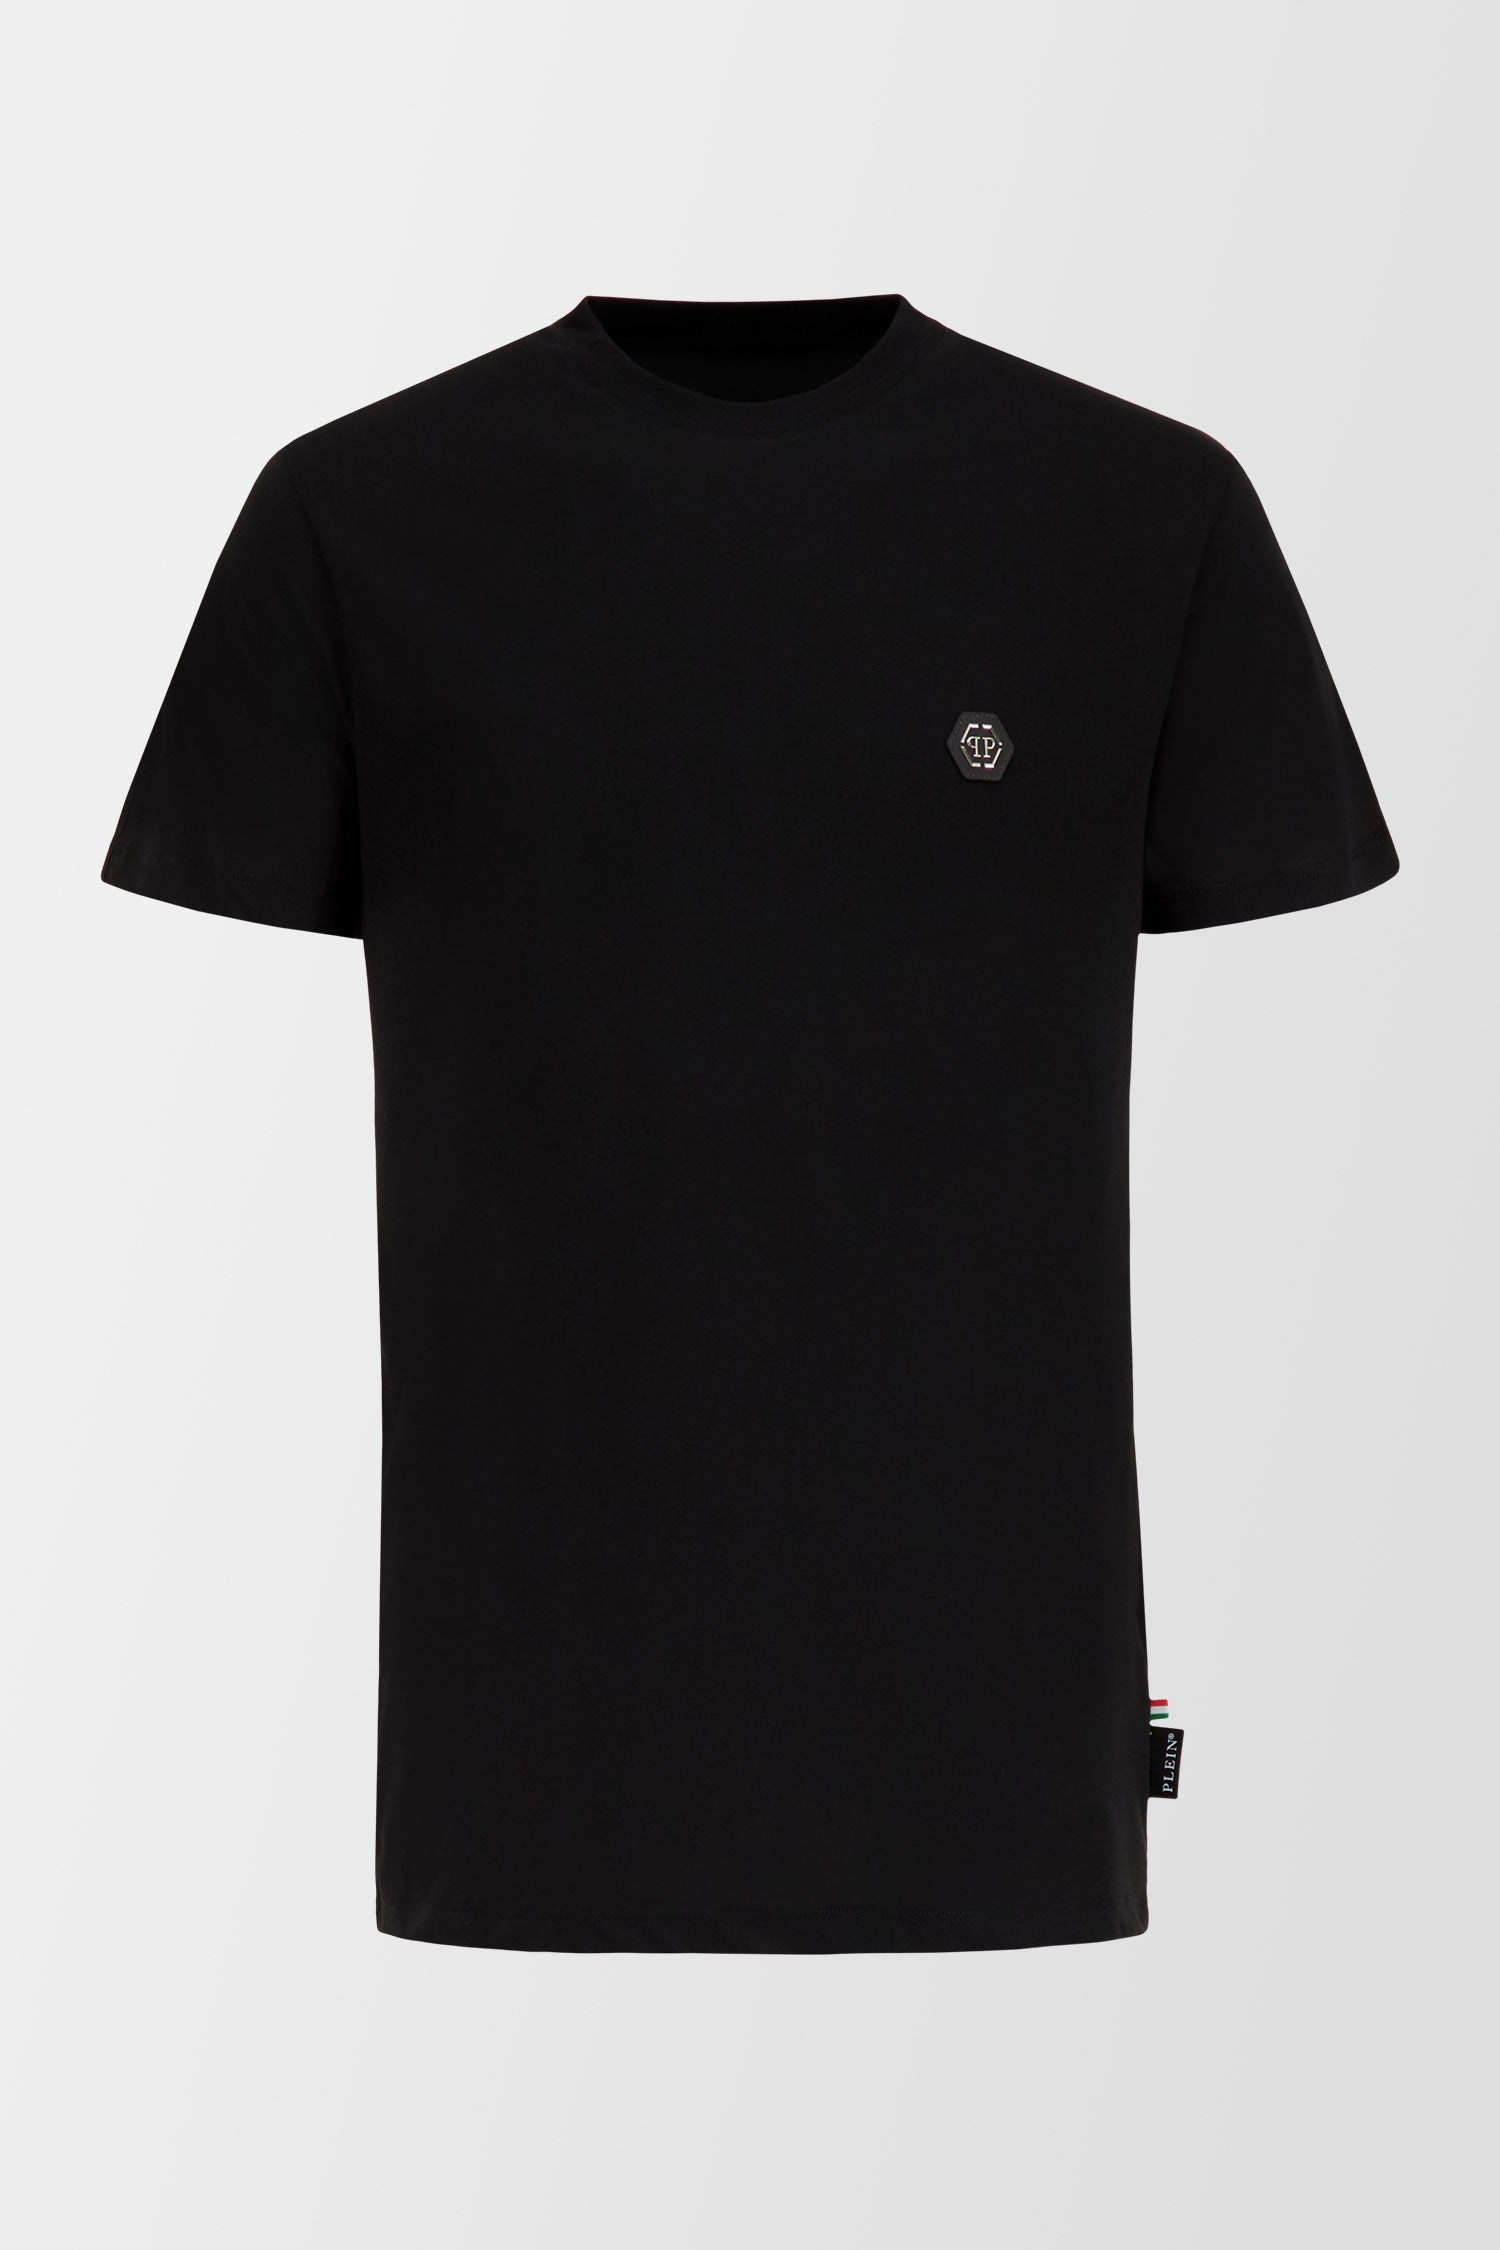 Philipp Plein Black T-Shirt